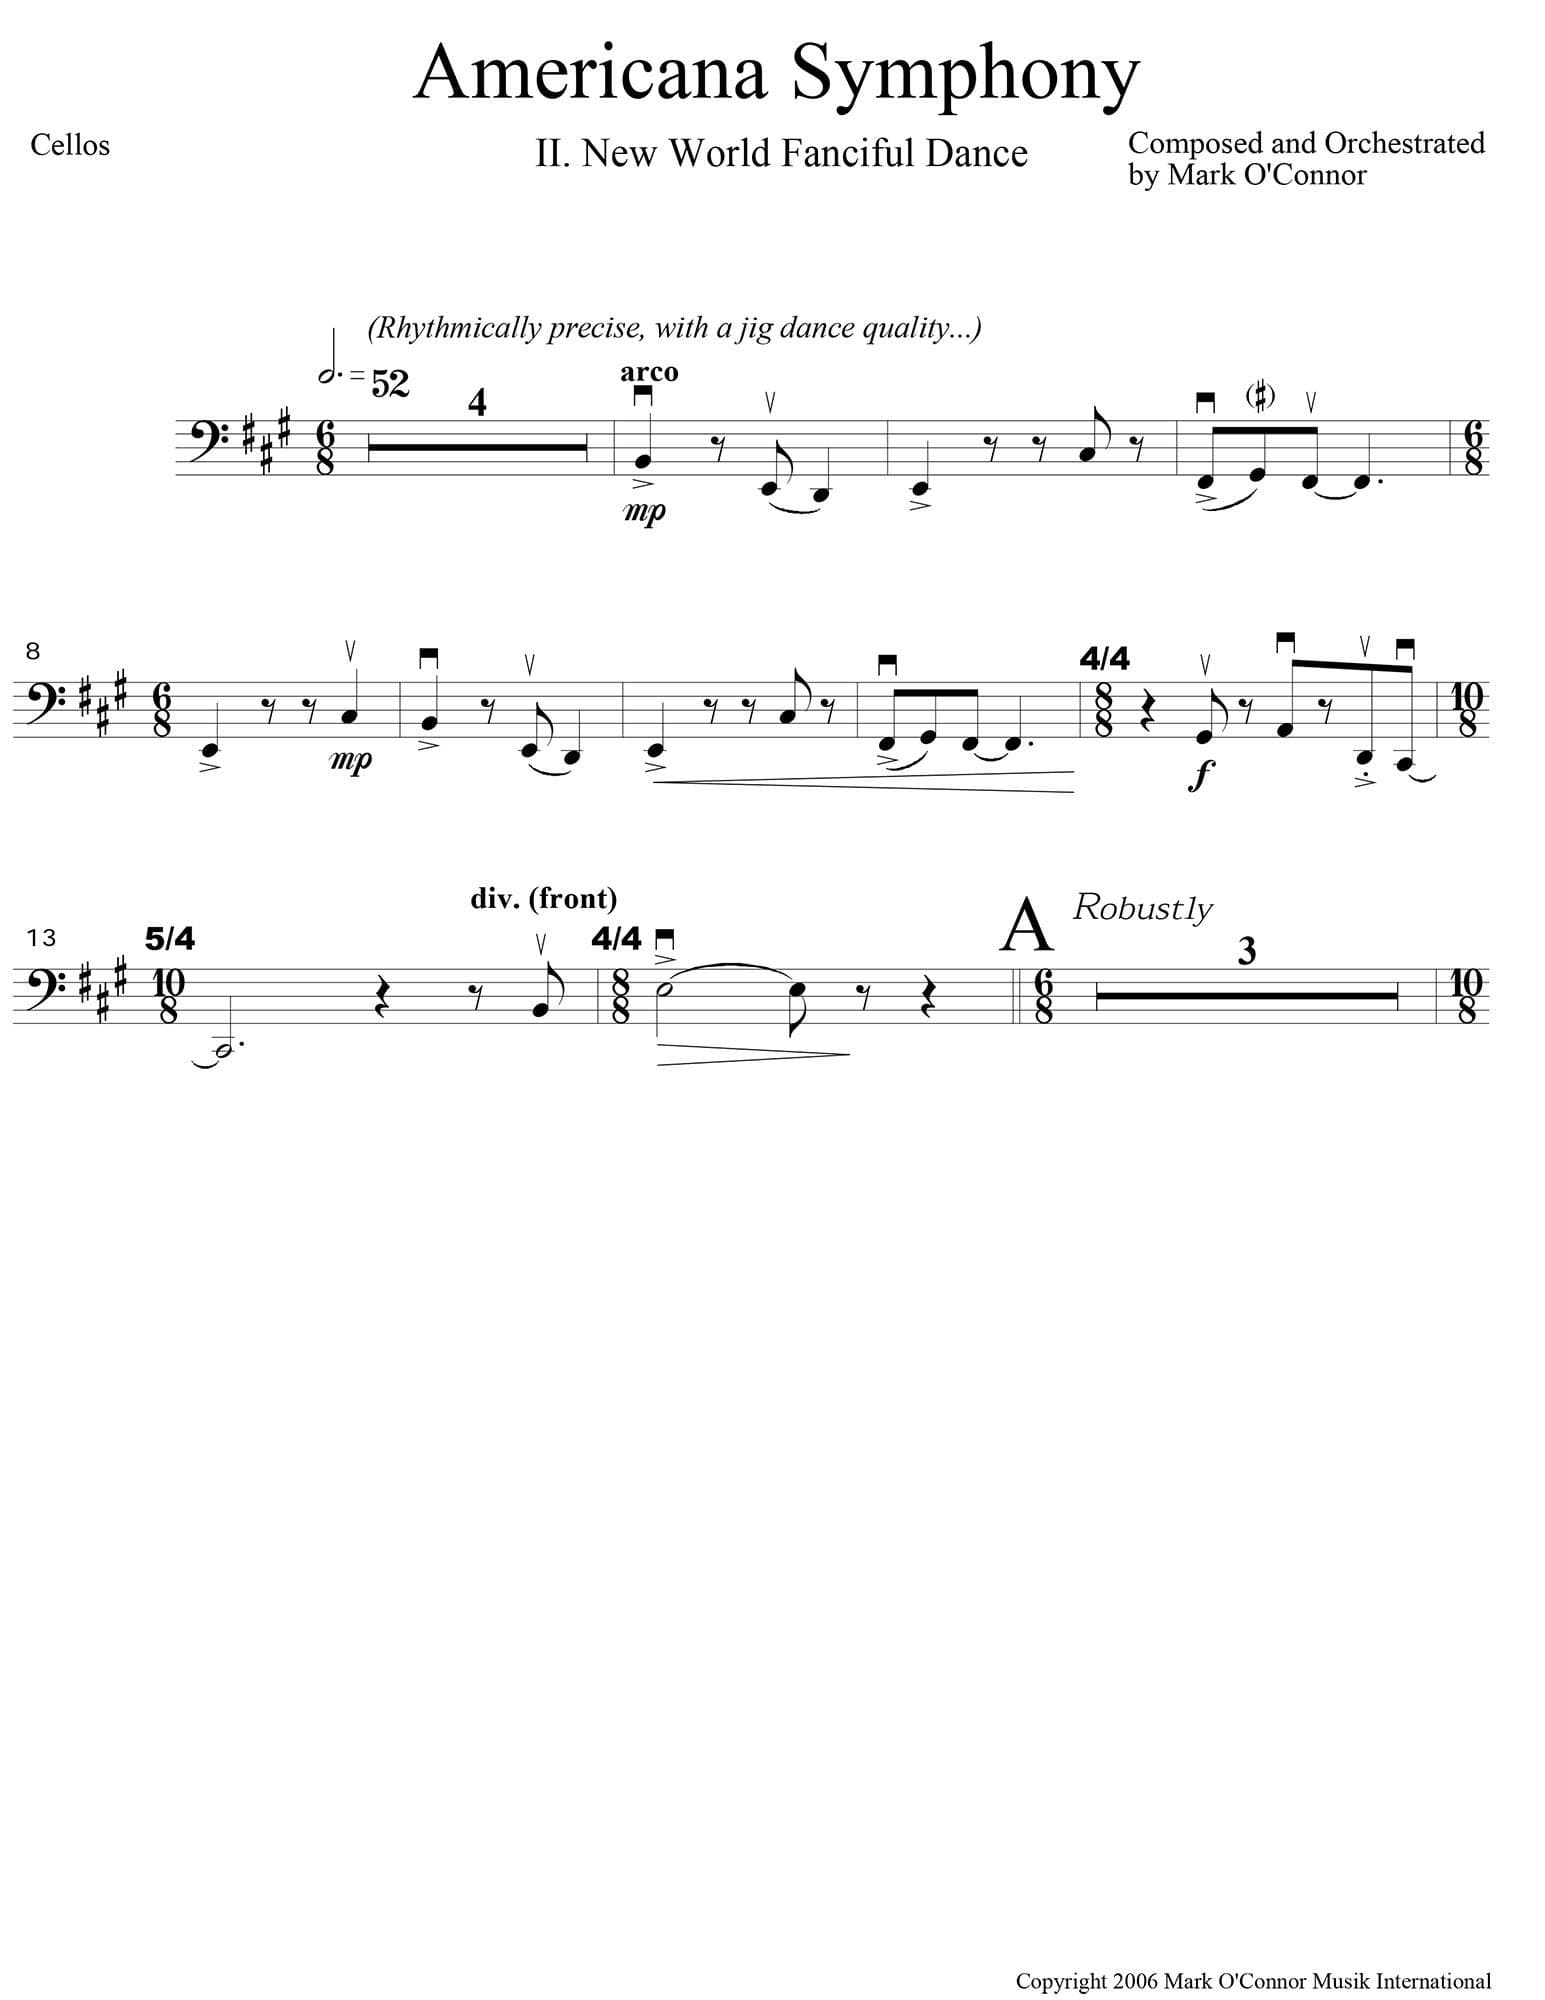 O'Connor, Mark - Americana Symphony "Variations on Appalachia Waltz" - String Parts - Digital Download